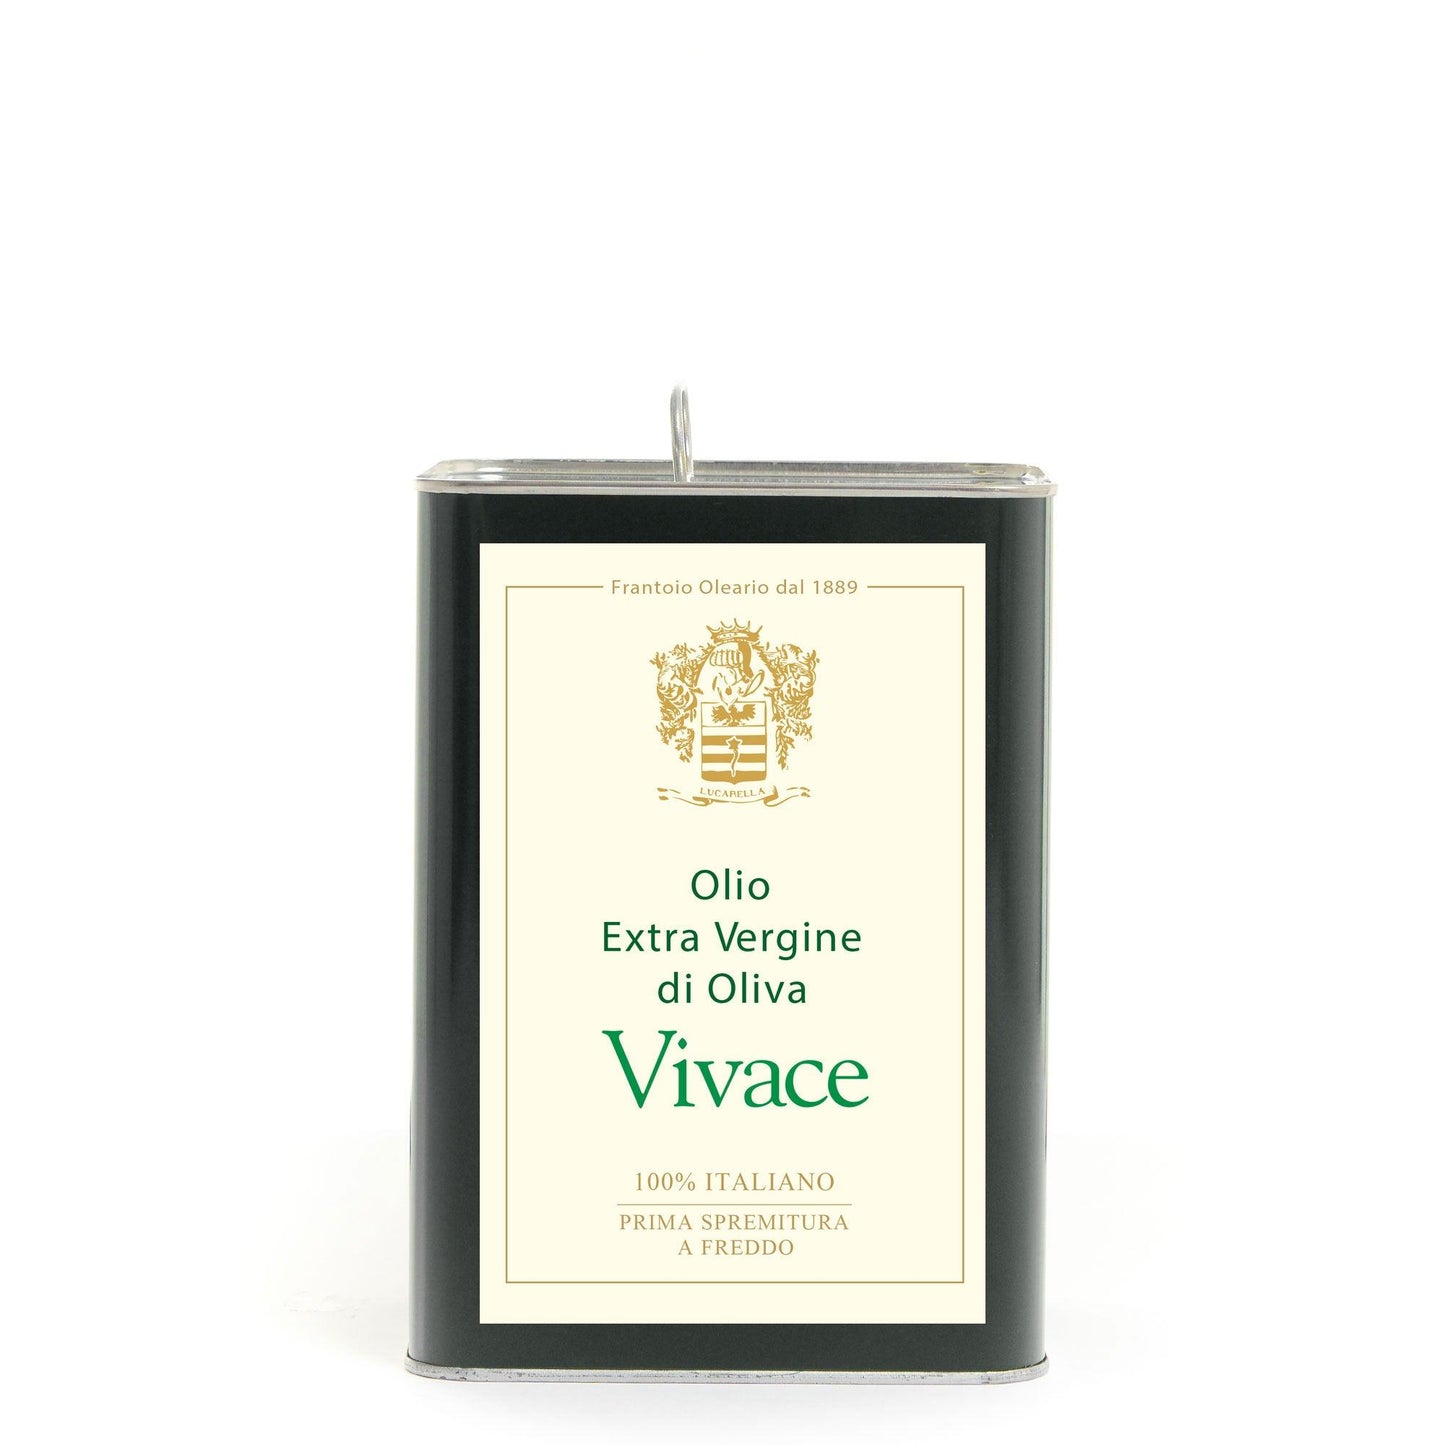 Lattina di Olio extravergine di oliva Vivace da 3 lt - L'Acropoli di Puglia